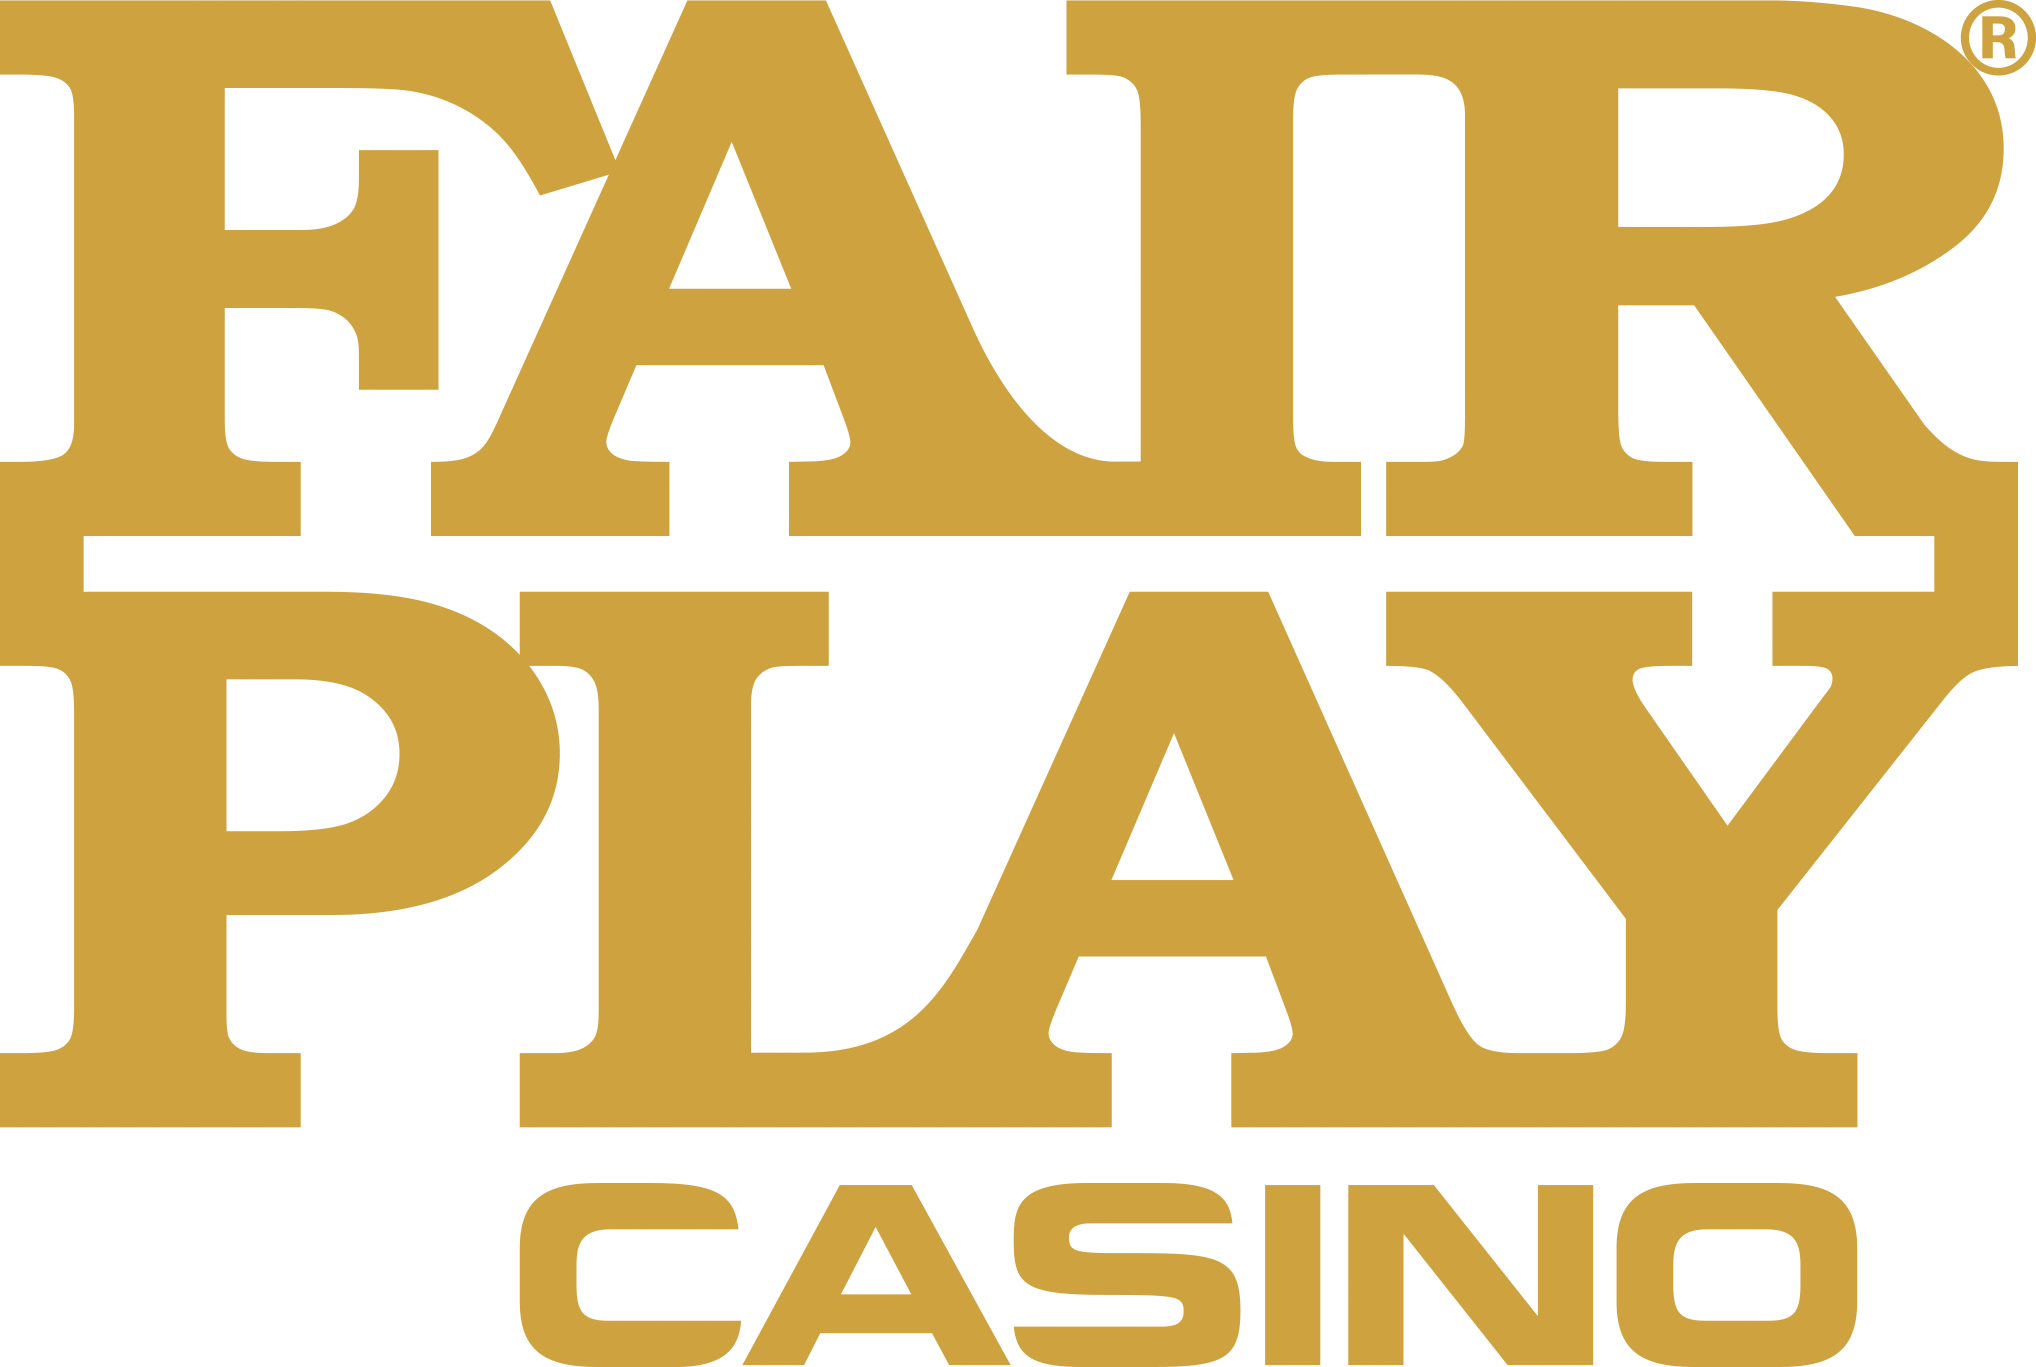 FairPlay_Basis_Logo_goud.png